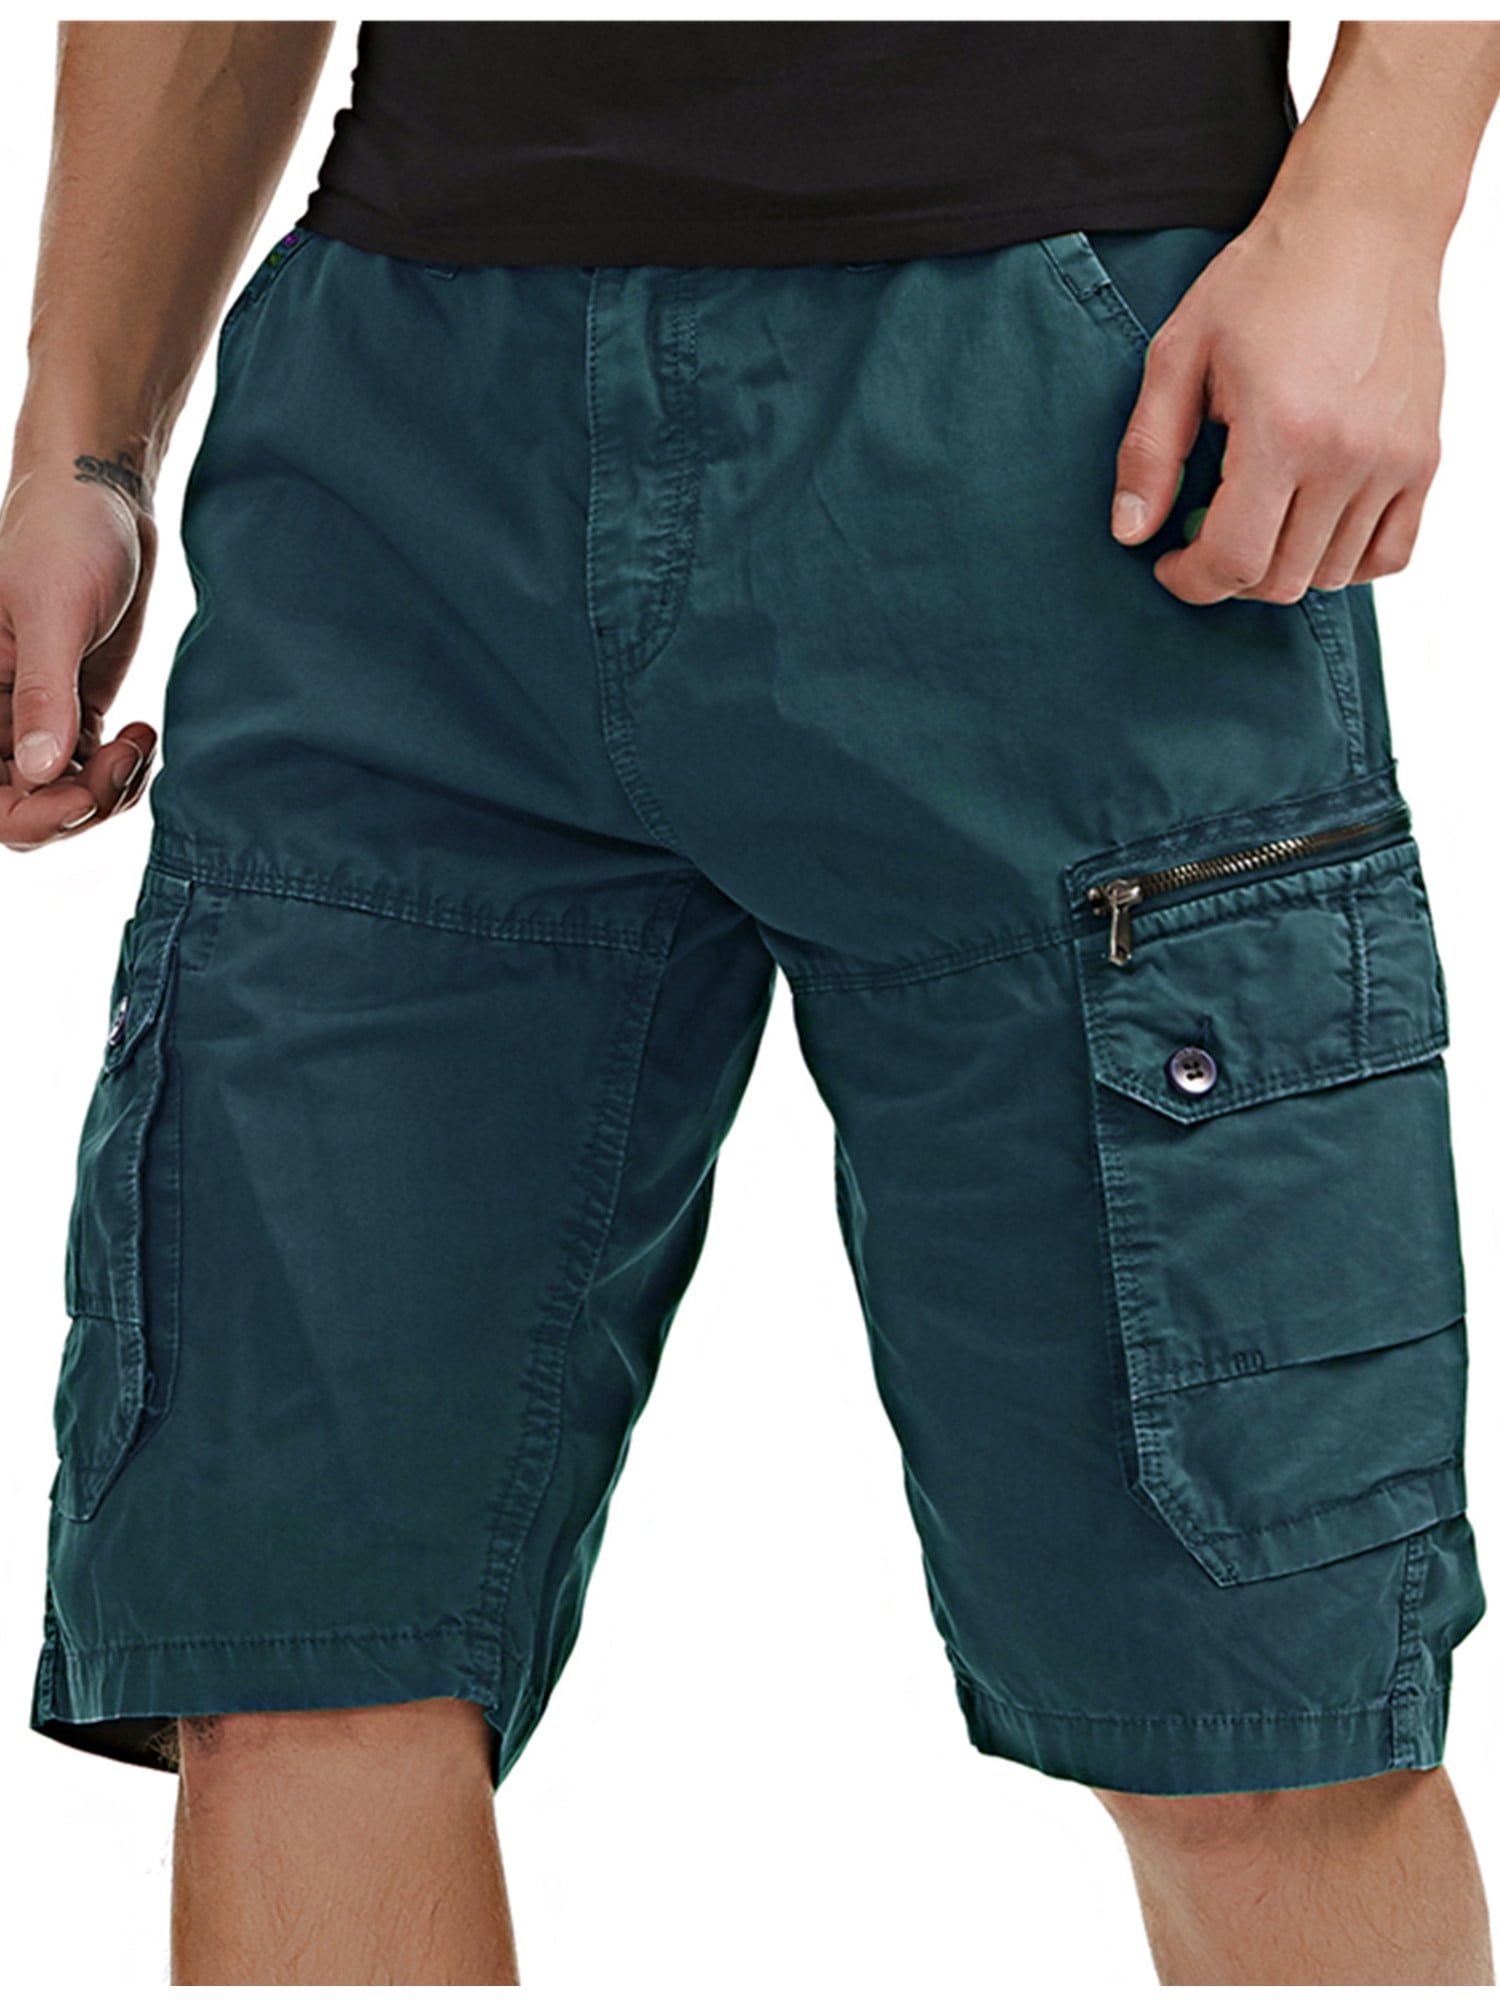 【2019 New】 Mens Sport Shorts,Summer Casual Breathable Loose Drawstring Home Plain Dry Training Short Pants 